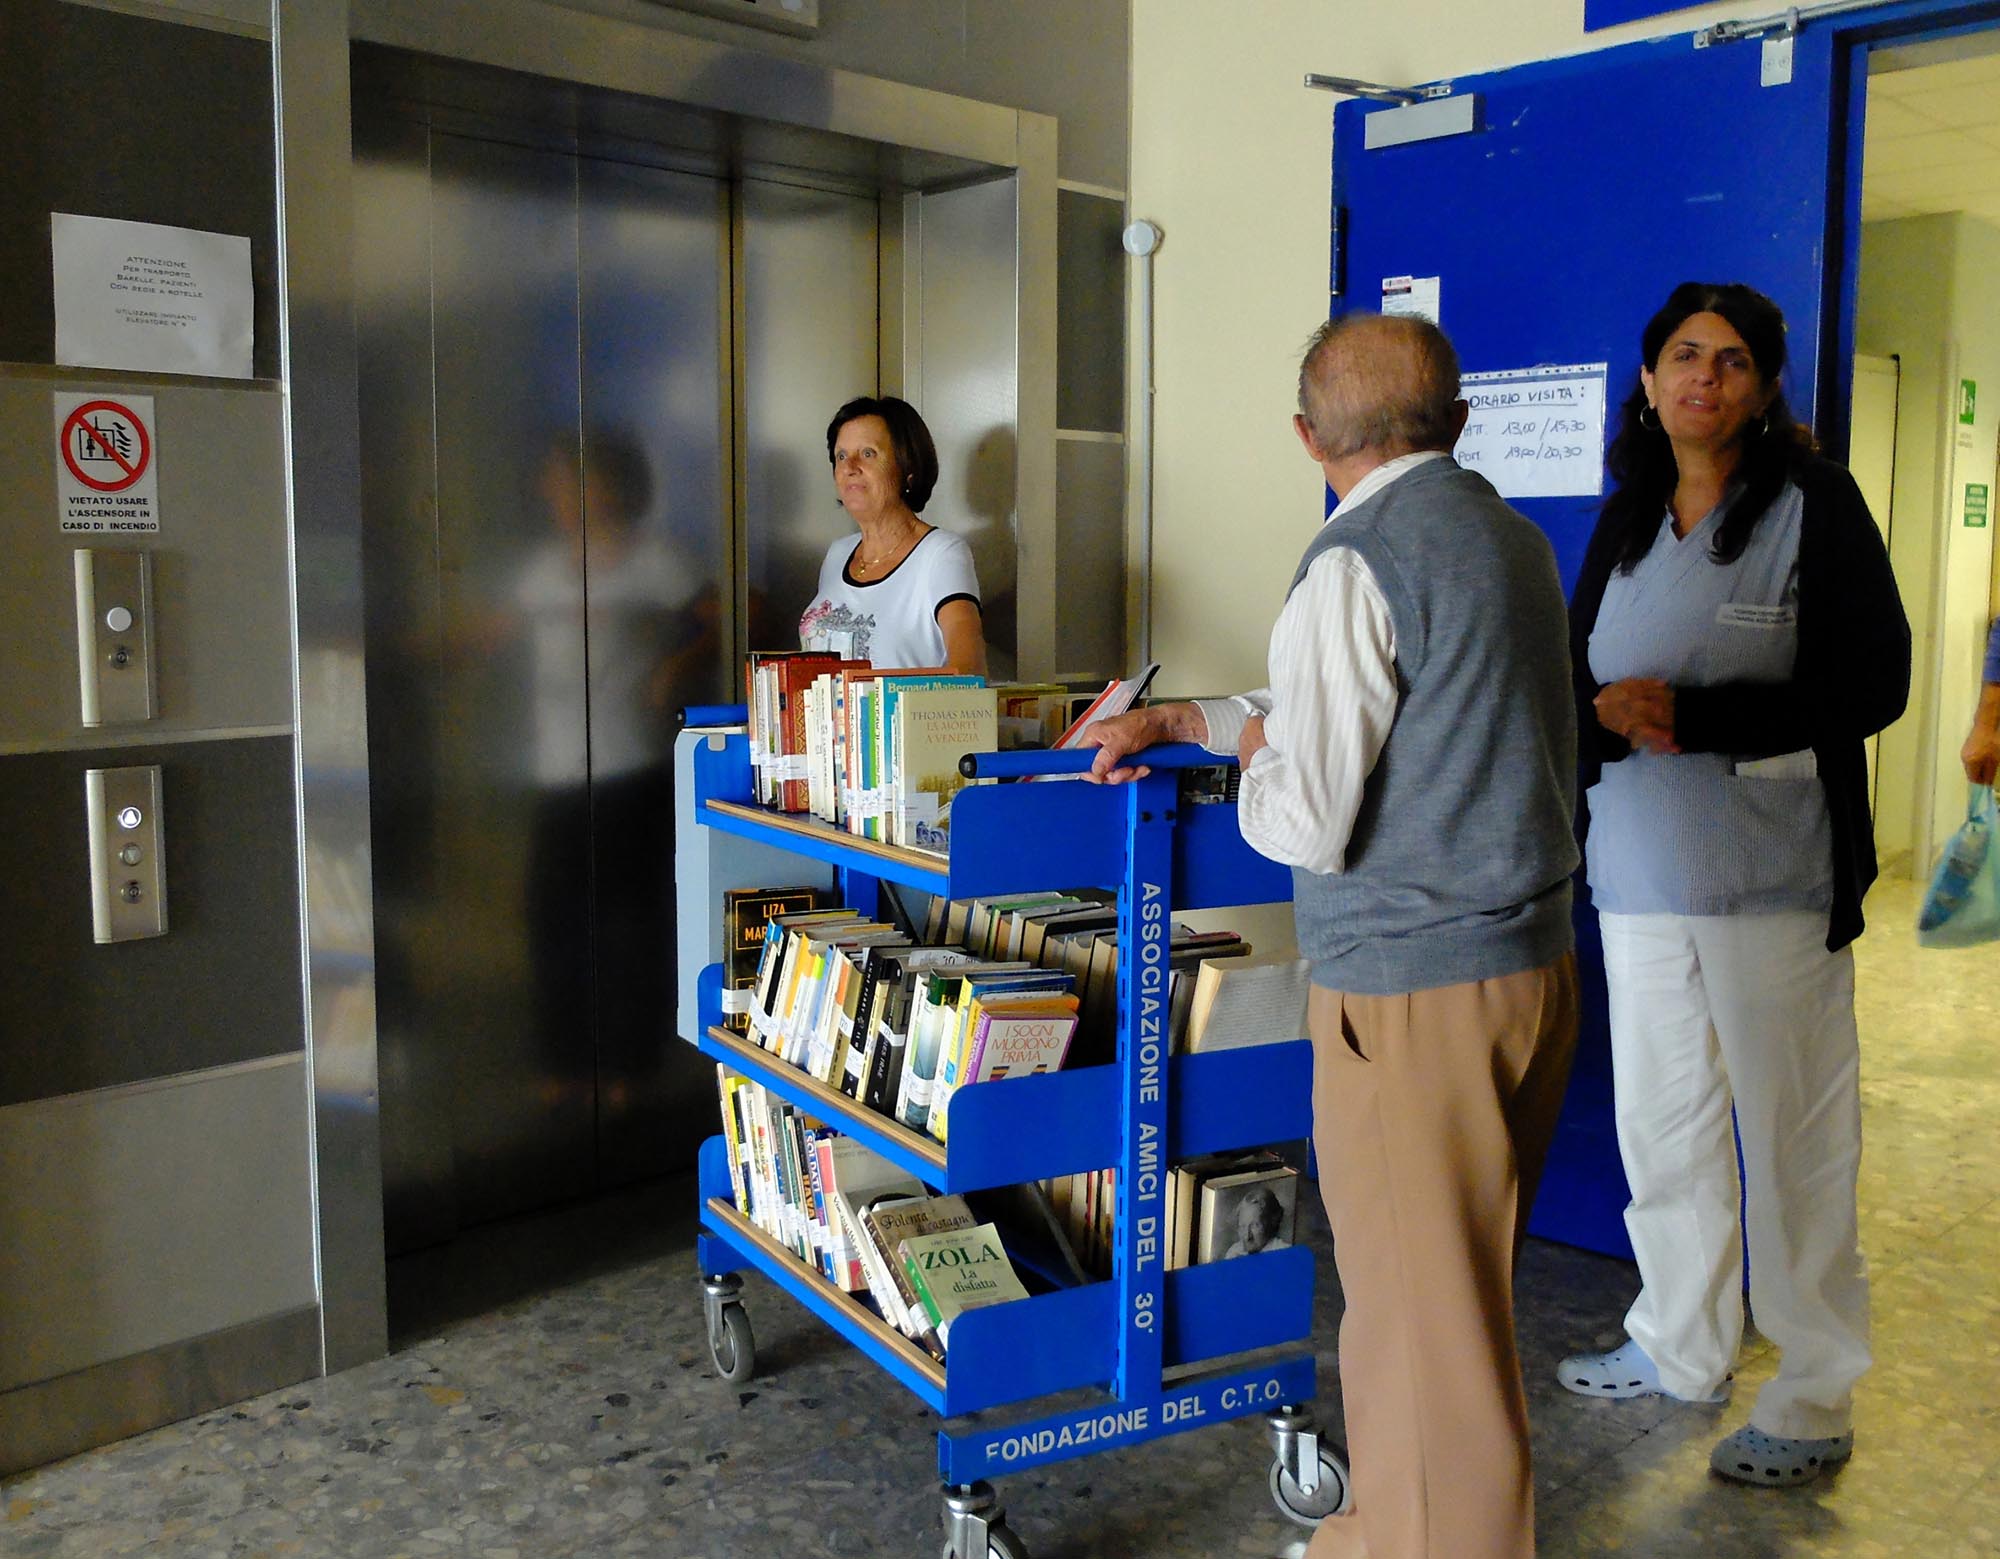 0308 Biblioteca in ospedale 1 - Biblioteca per i malati in ospedale